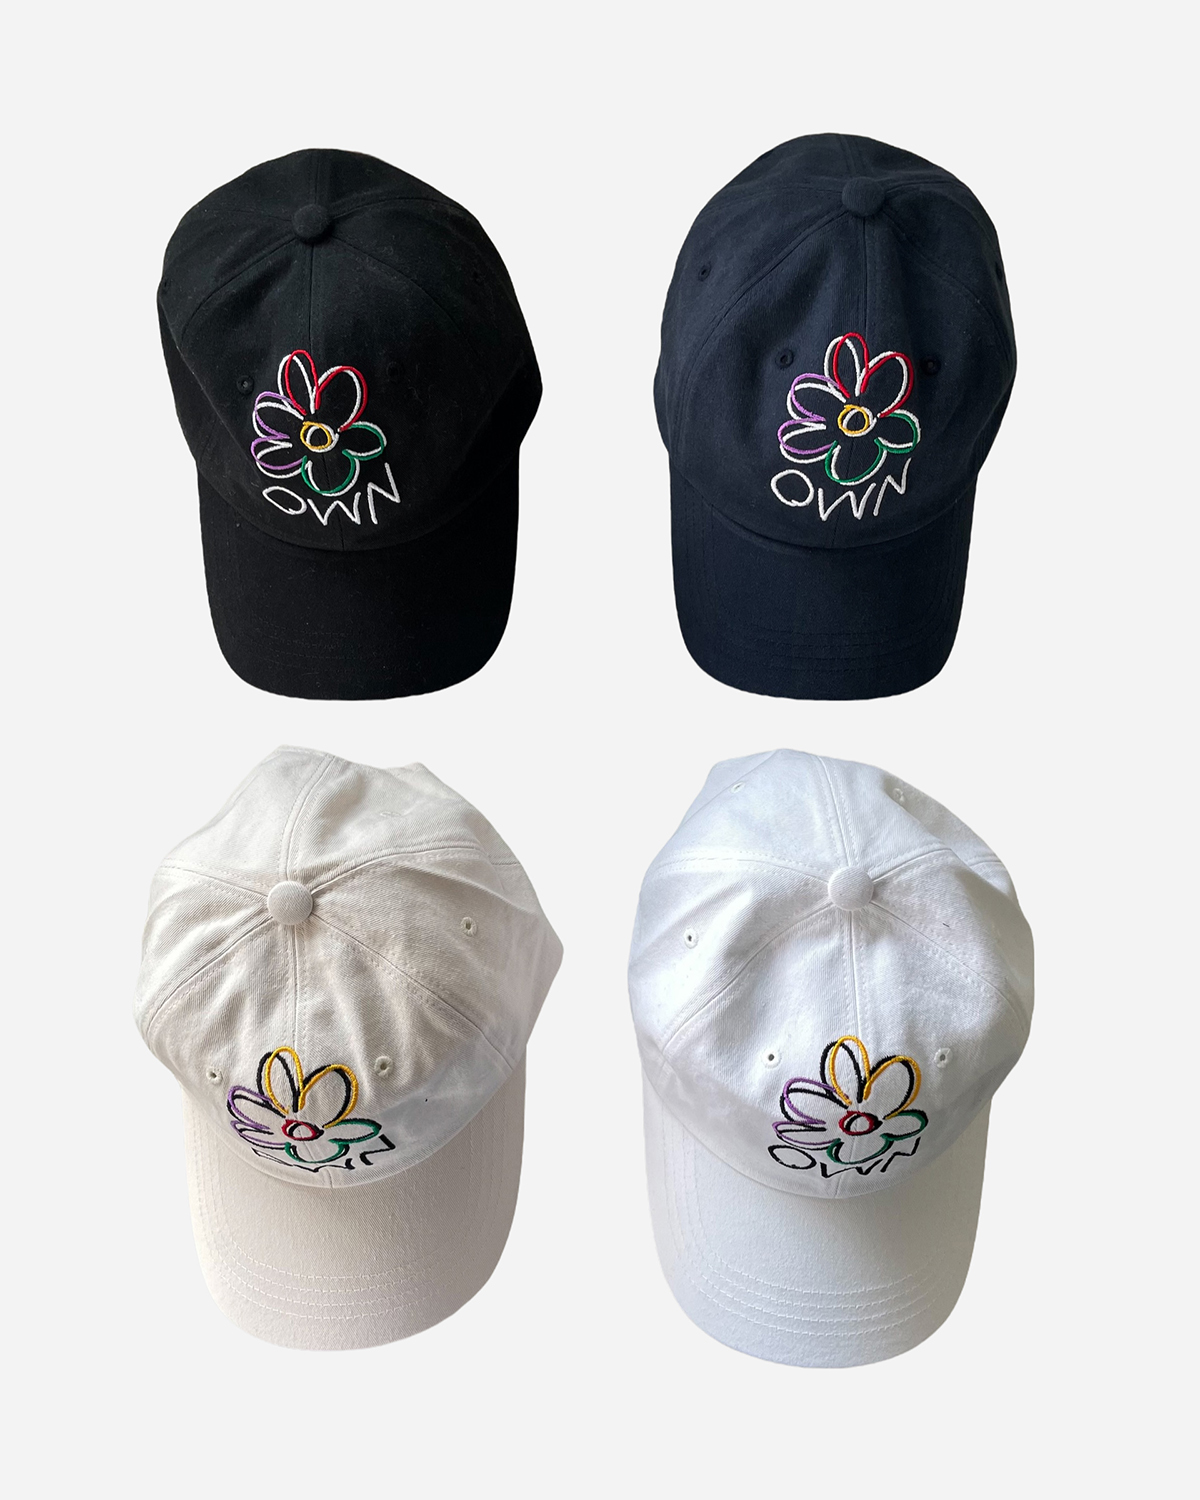 Own flower ball cap (4C)